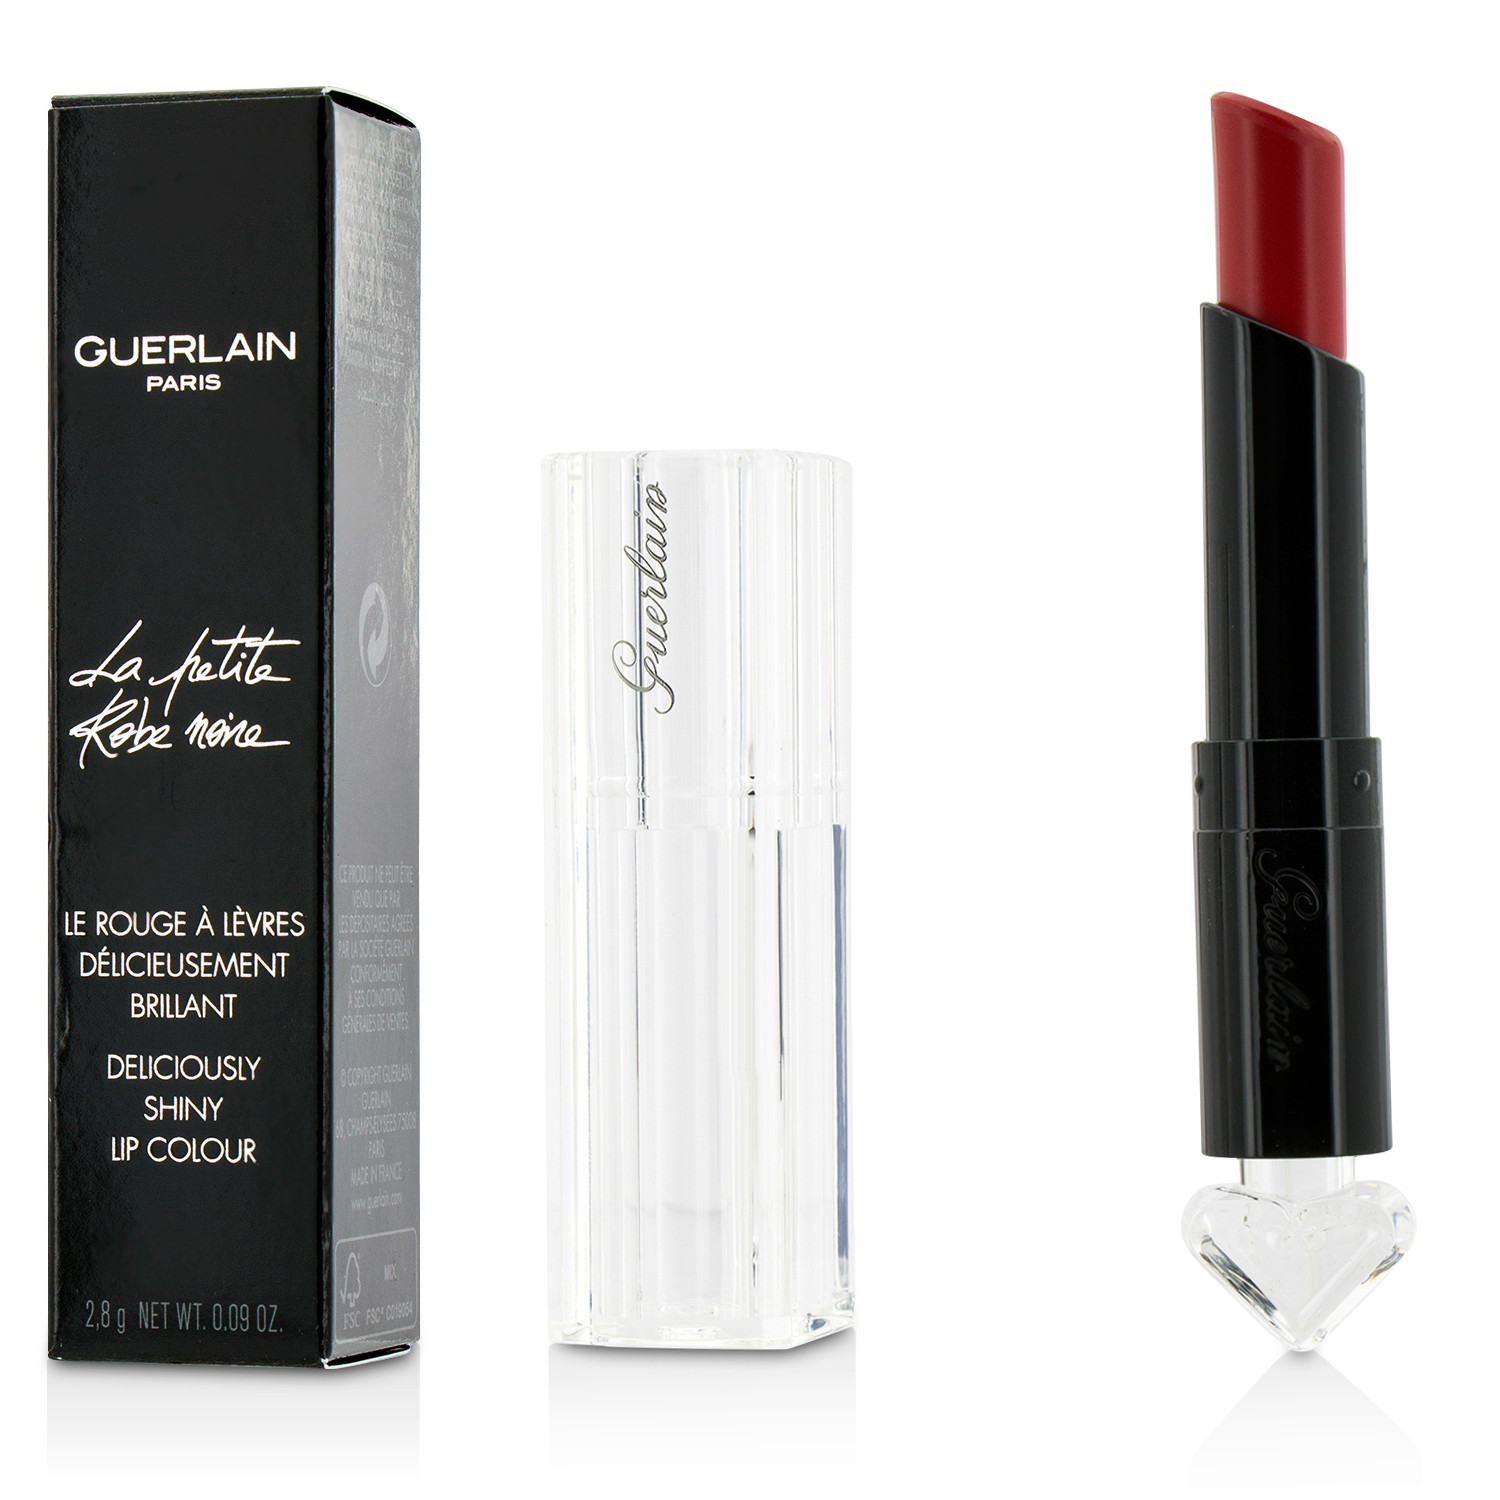 La Petite Robe Noire Deliciously Shiny Lip Colour - #003 Red Heels Guerlain Image